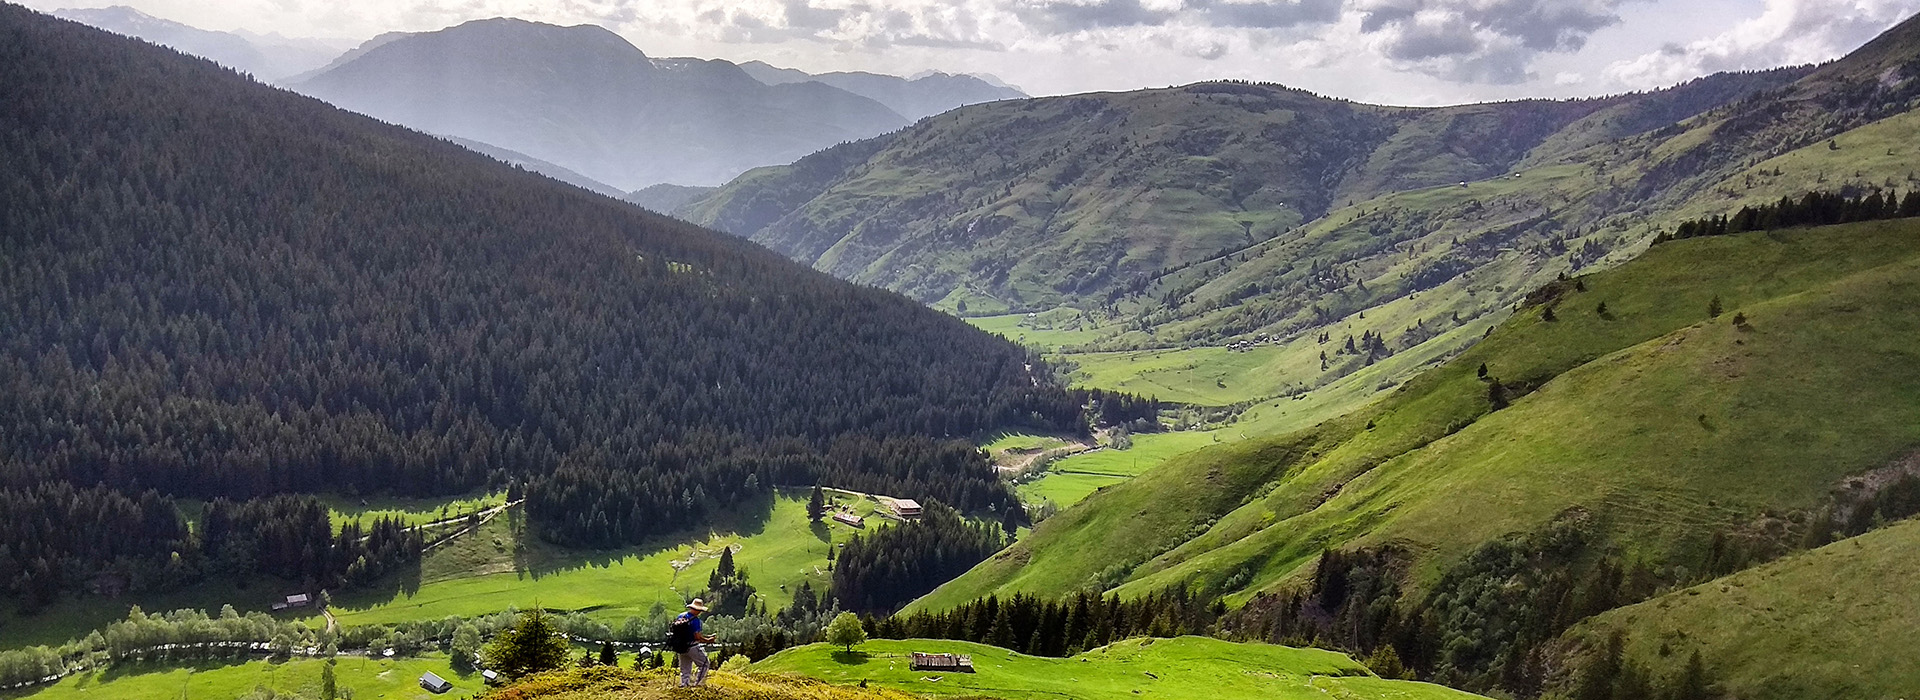 The Peaks of the Balkans walking guided holiday - Babino Polje